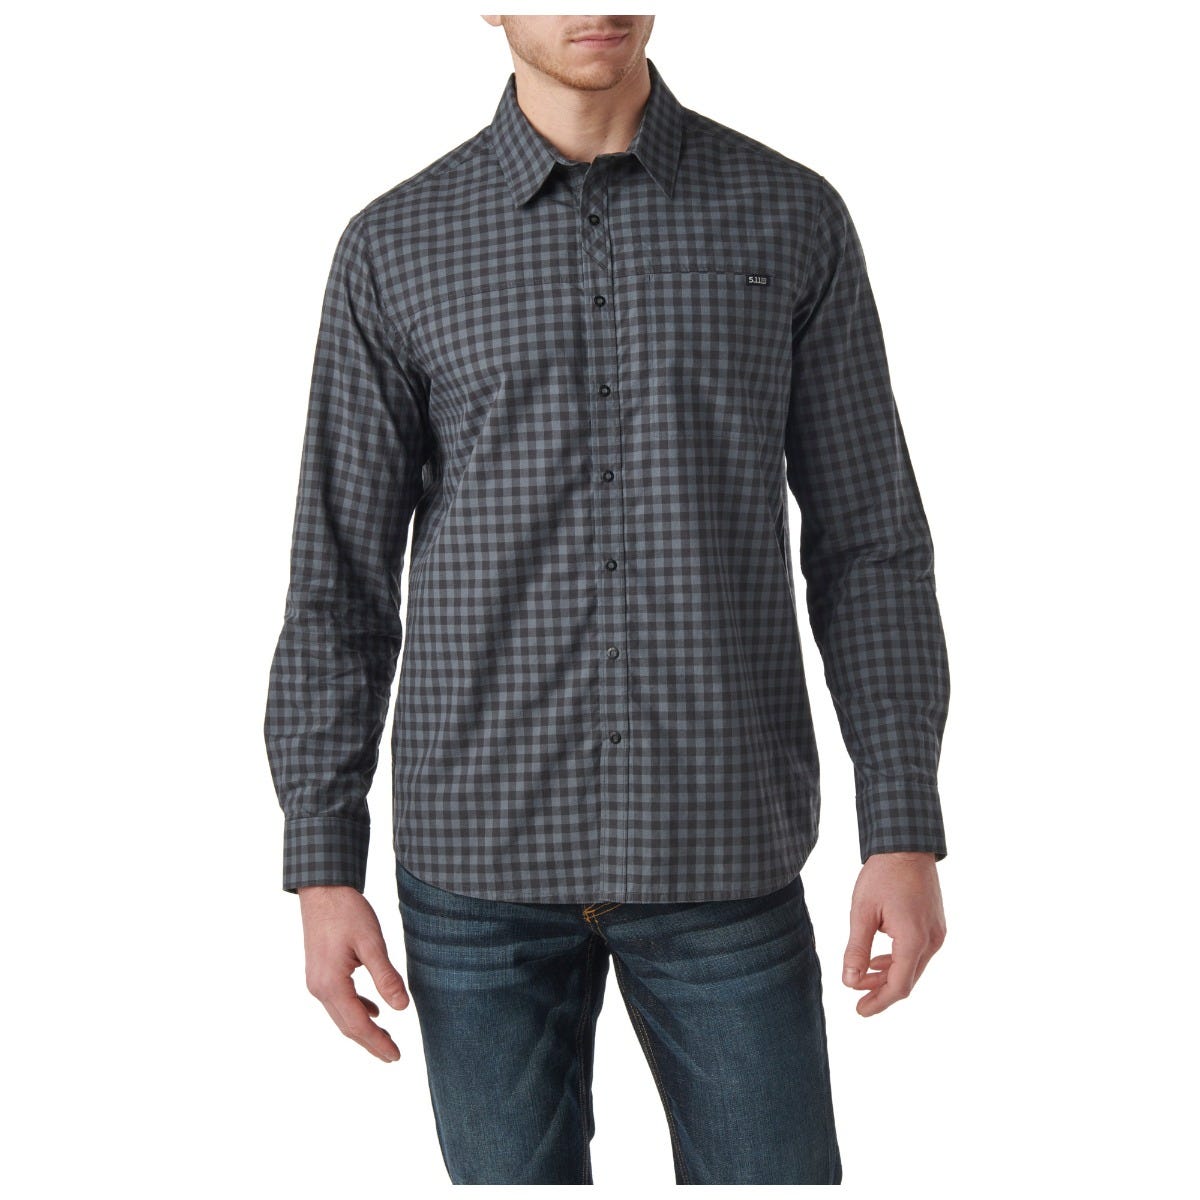 72496-019-M Medium *NEW* Black 5.11 Men's Ascension Long Sleeve Shirt 